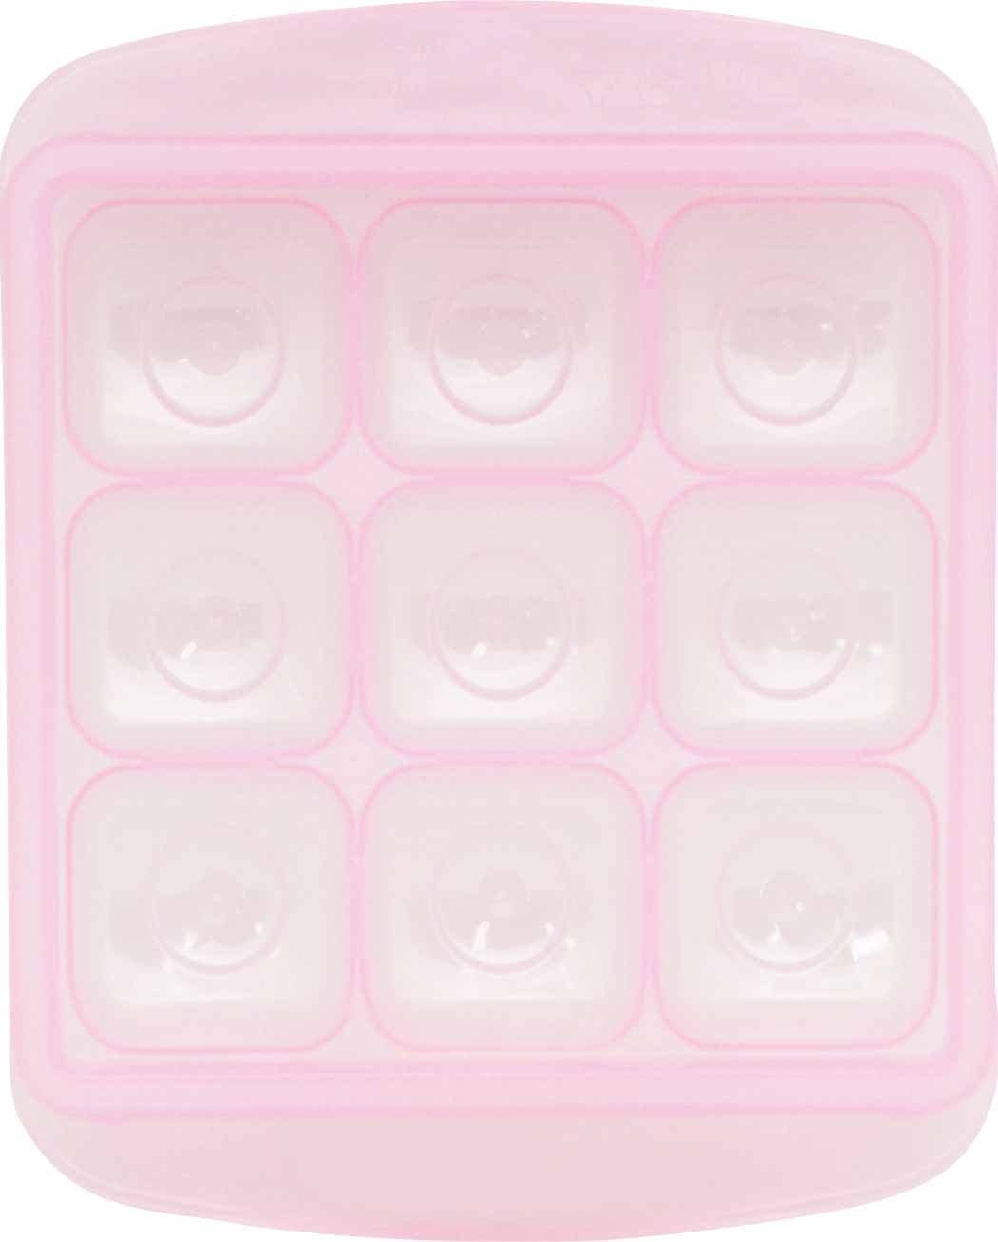 EDISONmama(エジソンママ) 冷凍小分けパックの商品画像4 